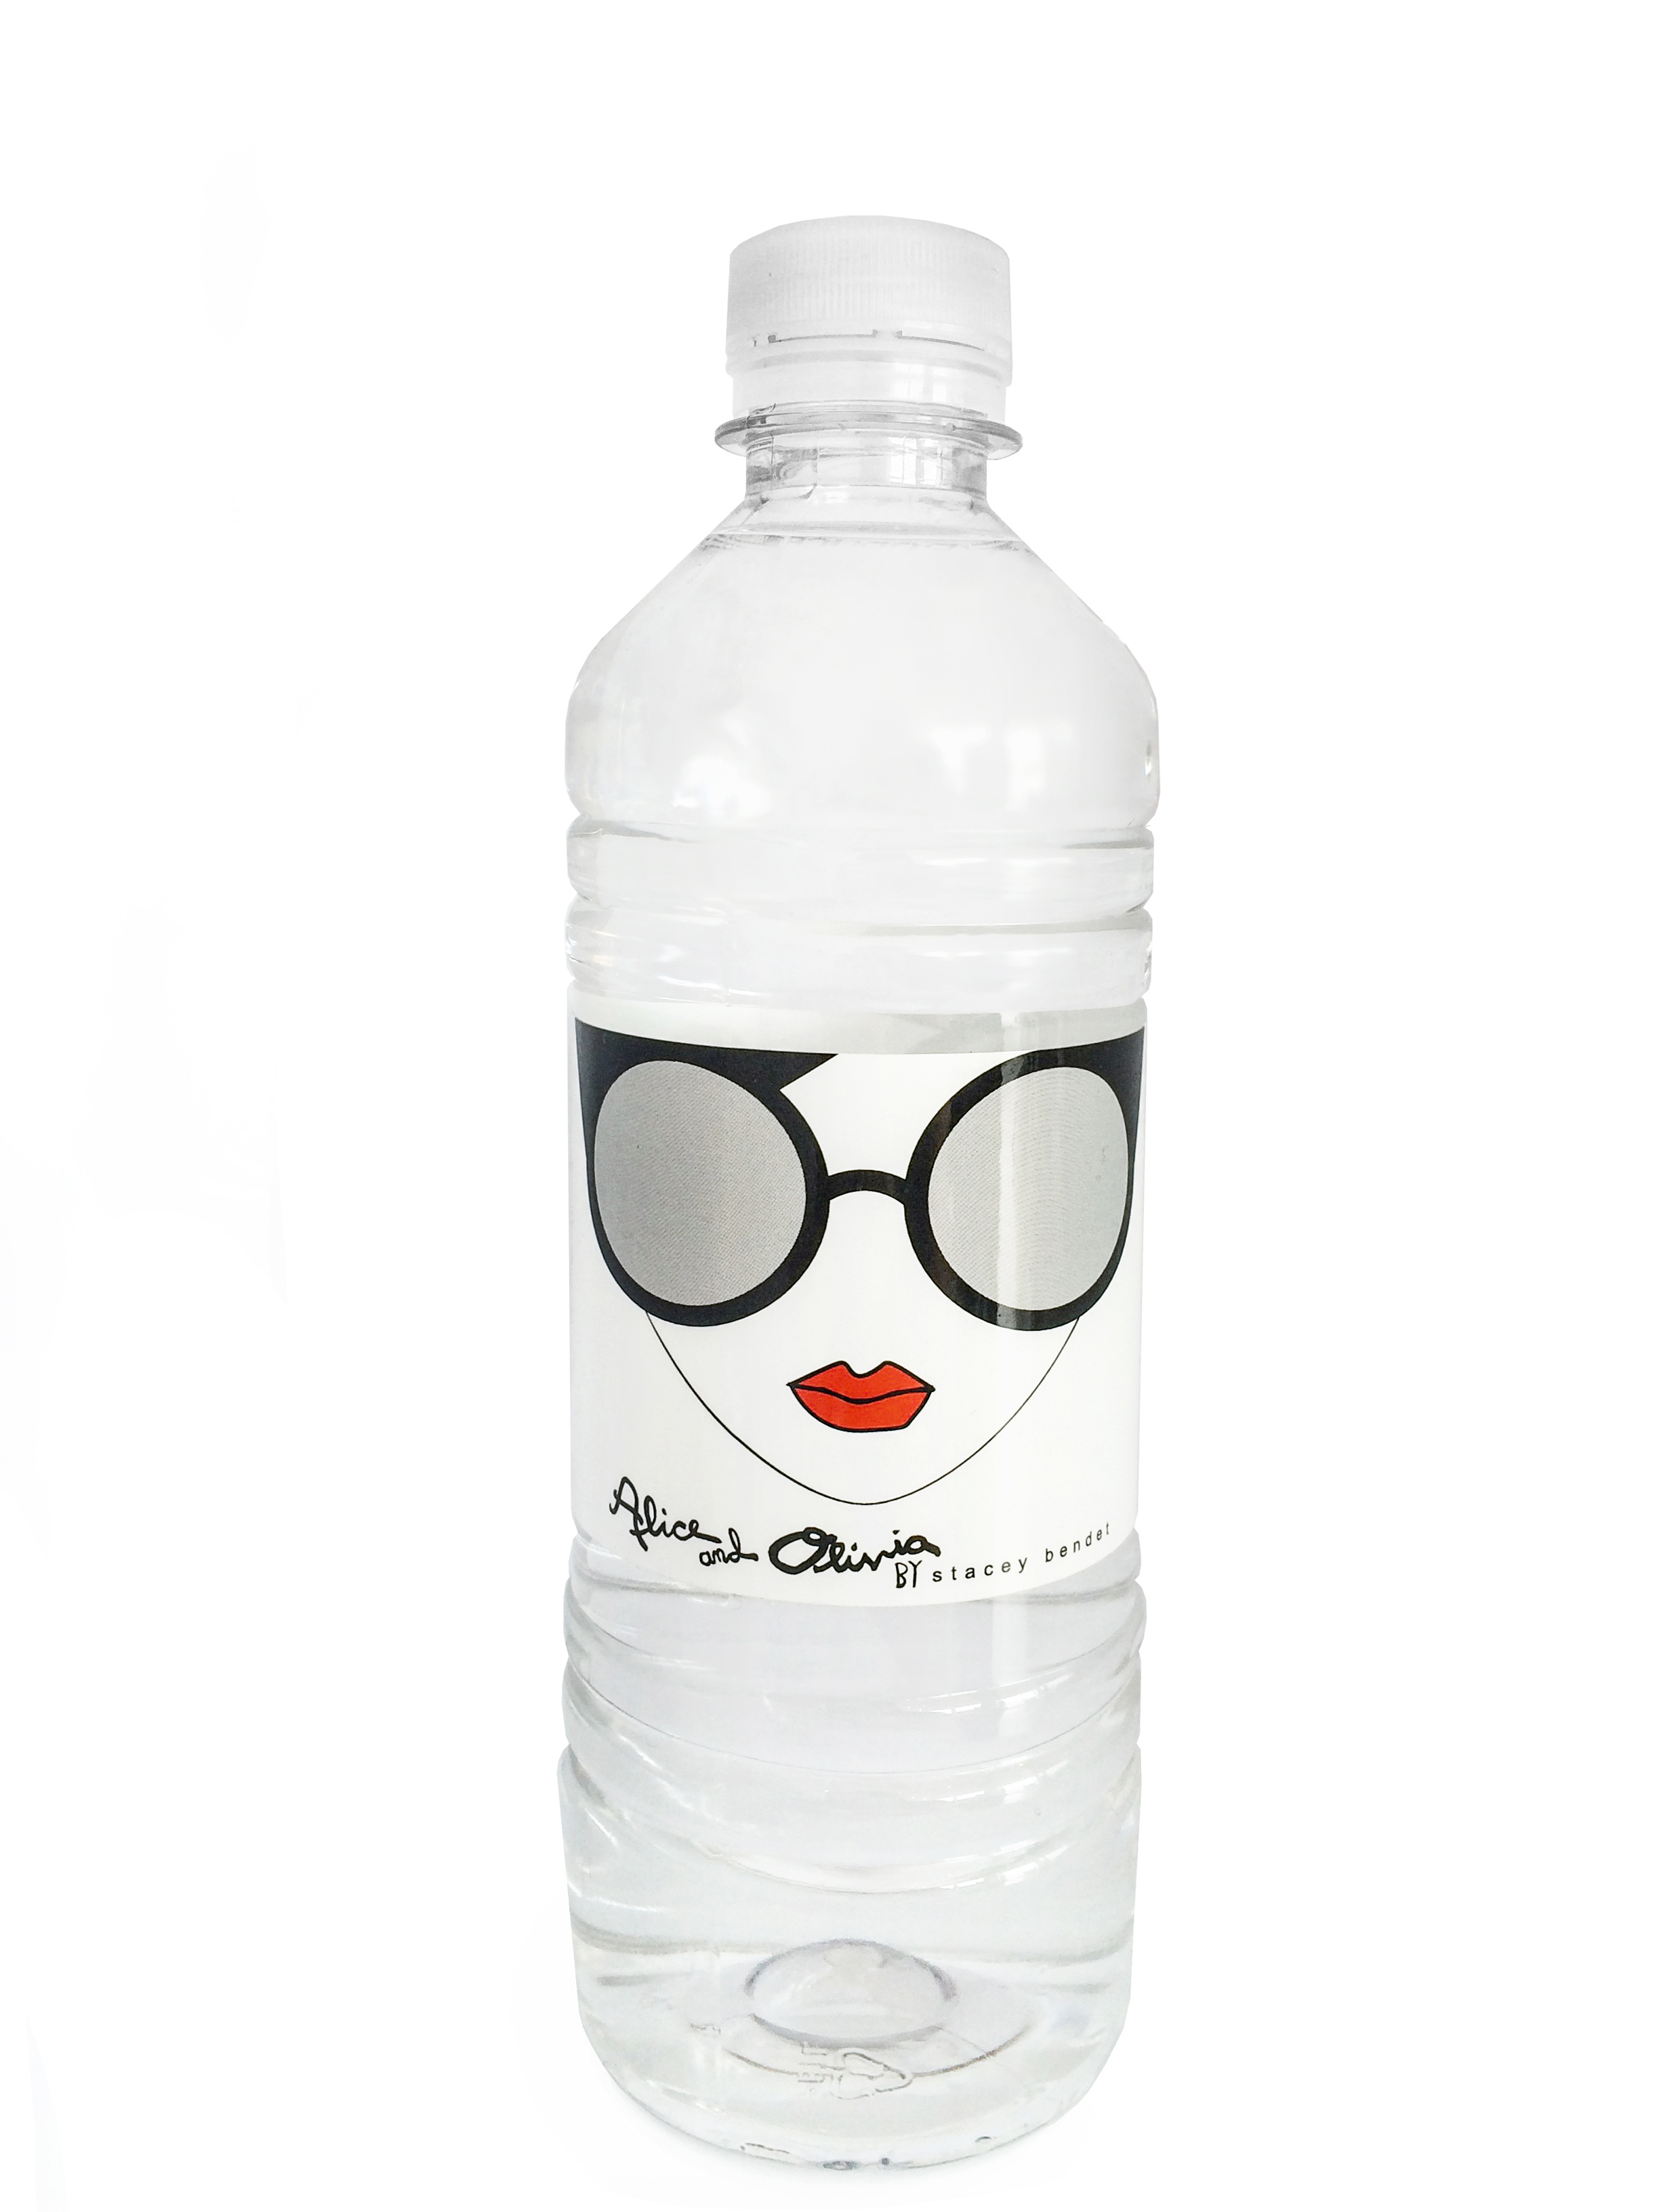 Ao_water bottle.jpg